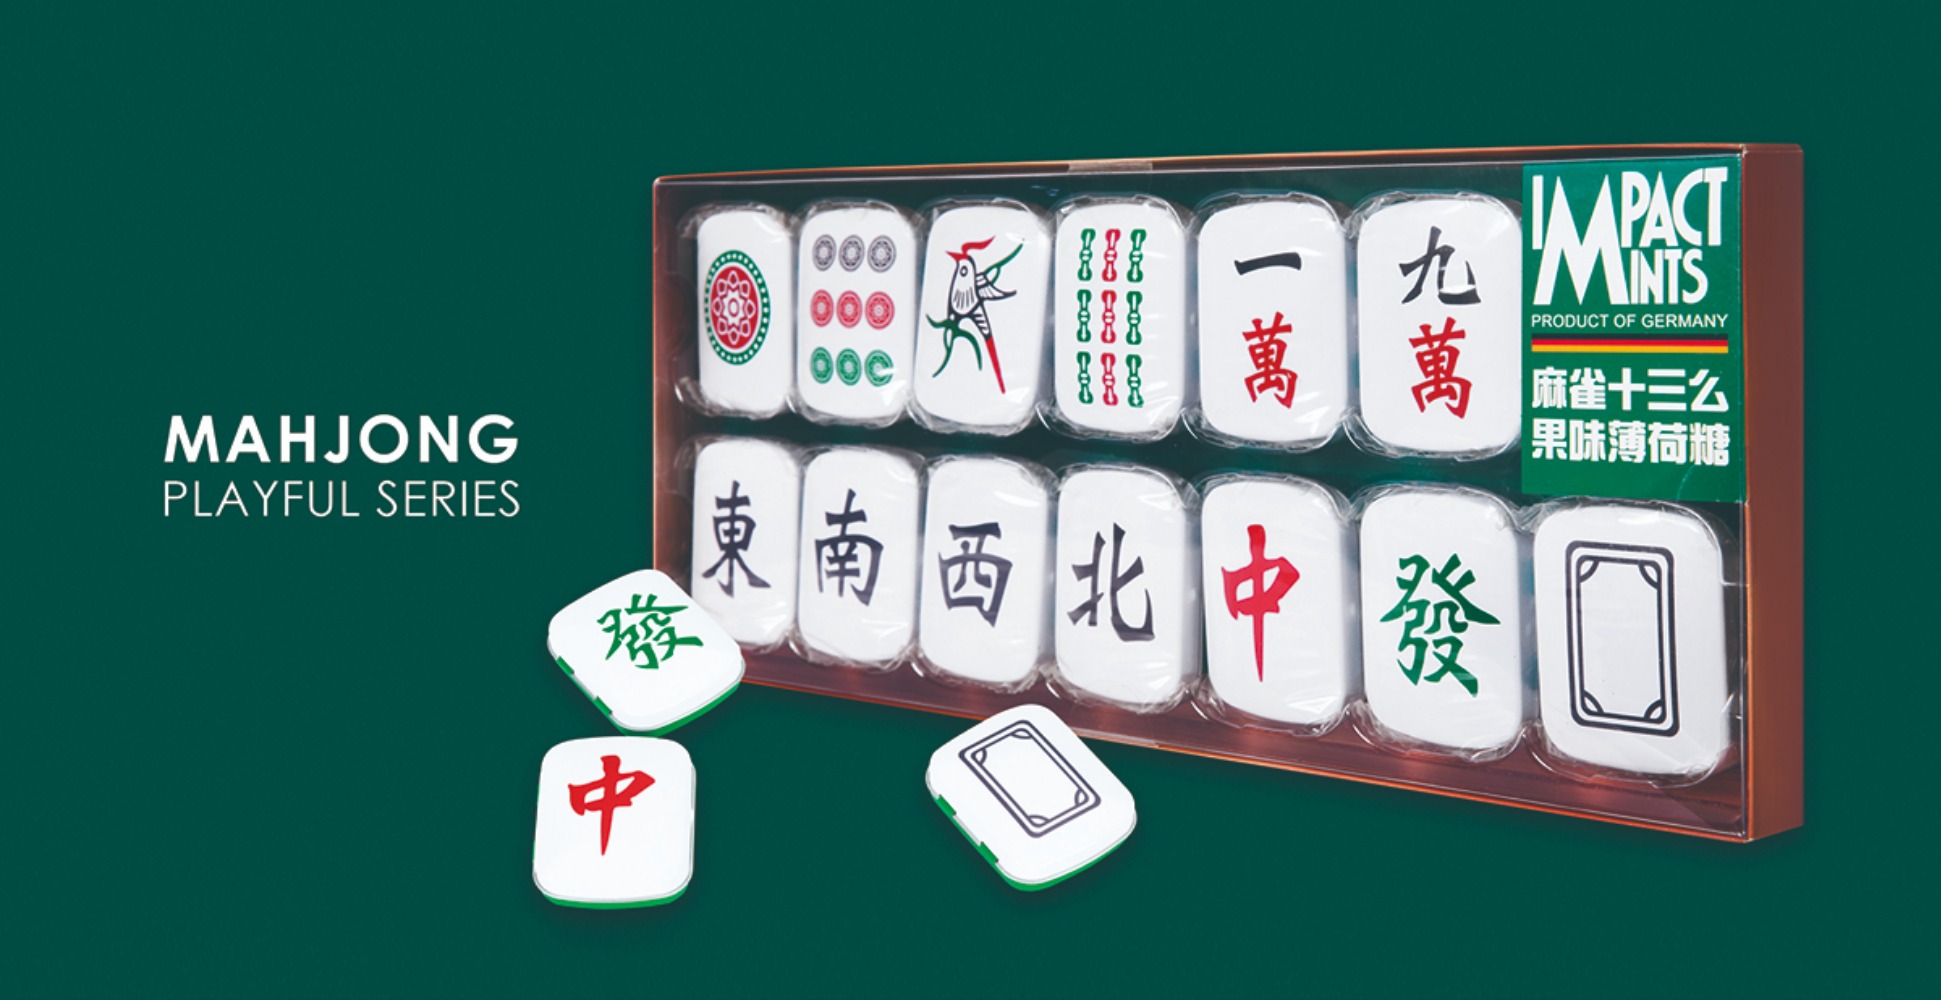 IMPACT MINTS Mahjong Edition